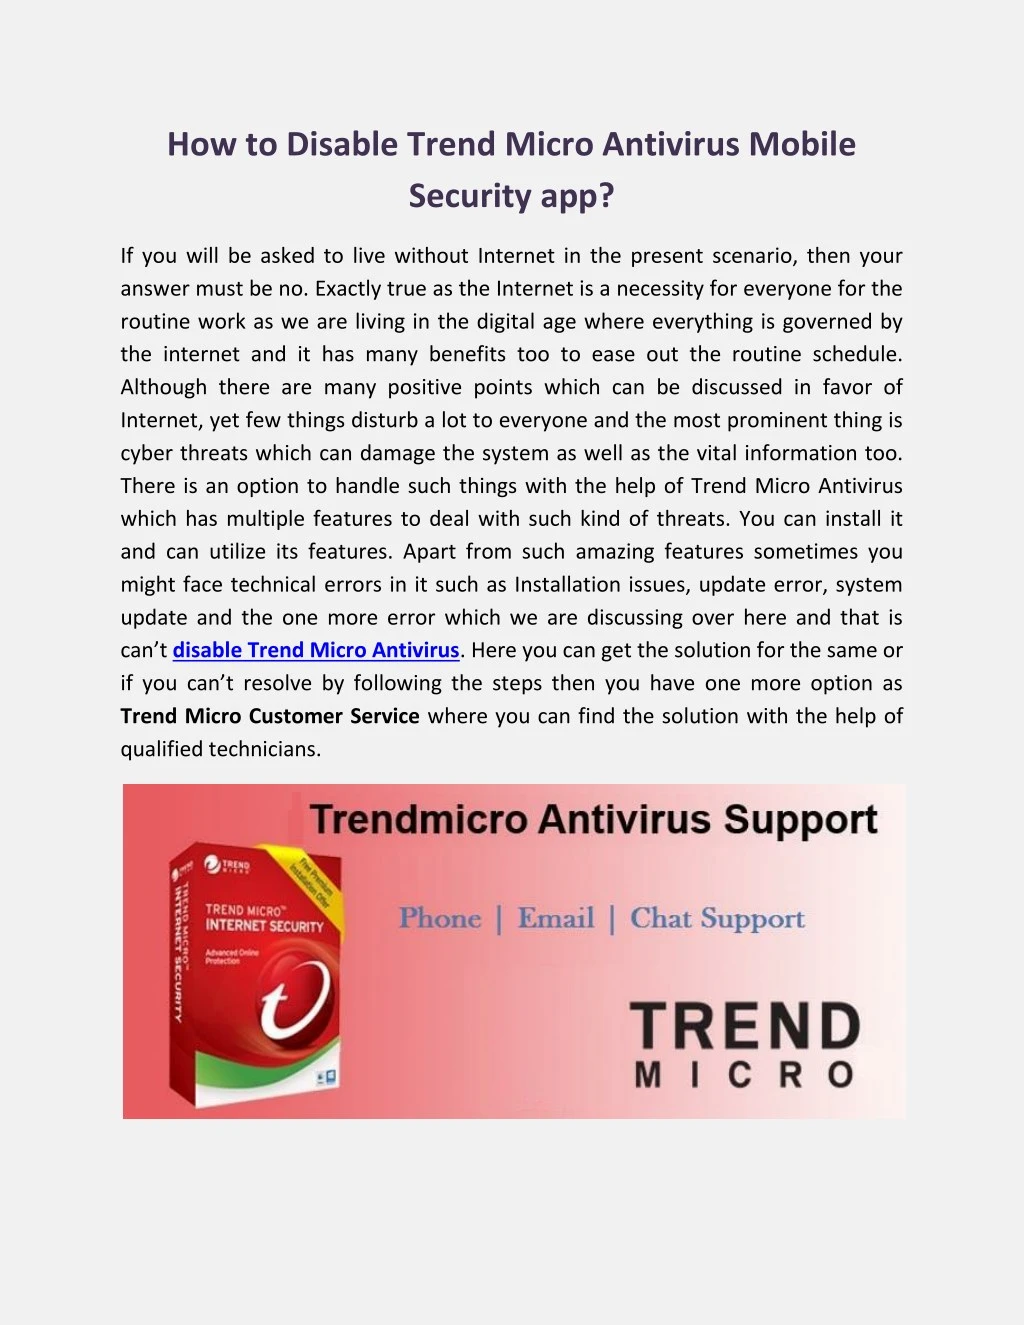 trend micro antivirus phone number